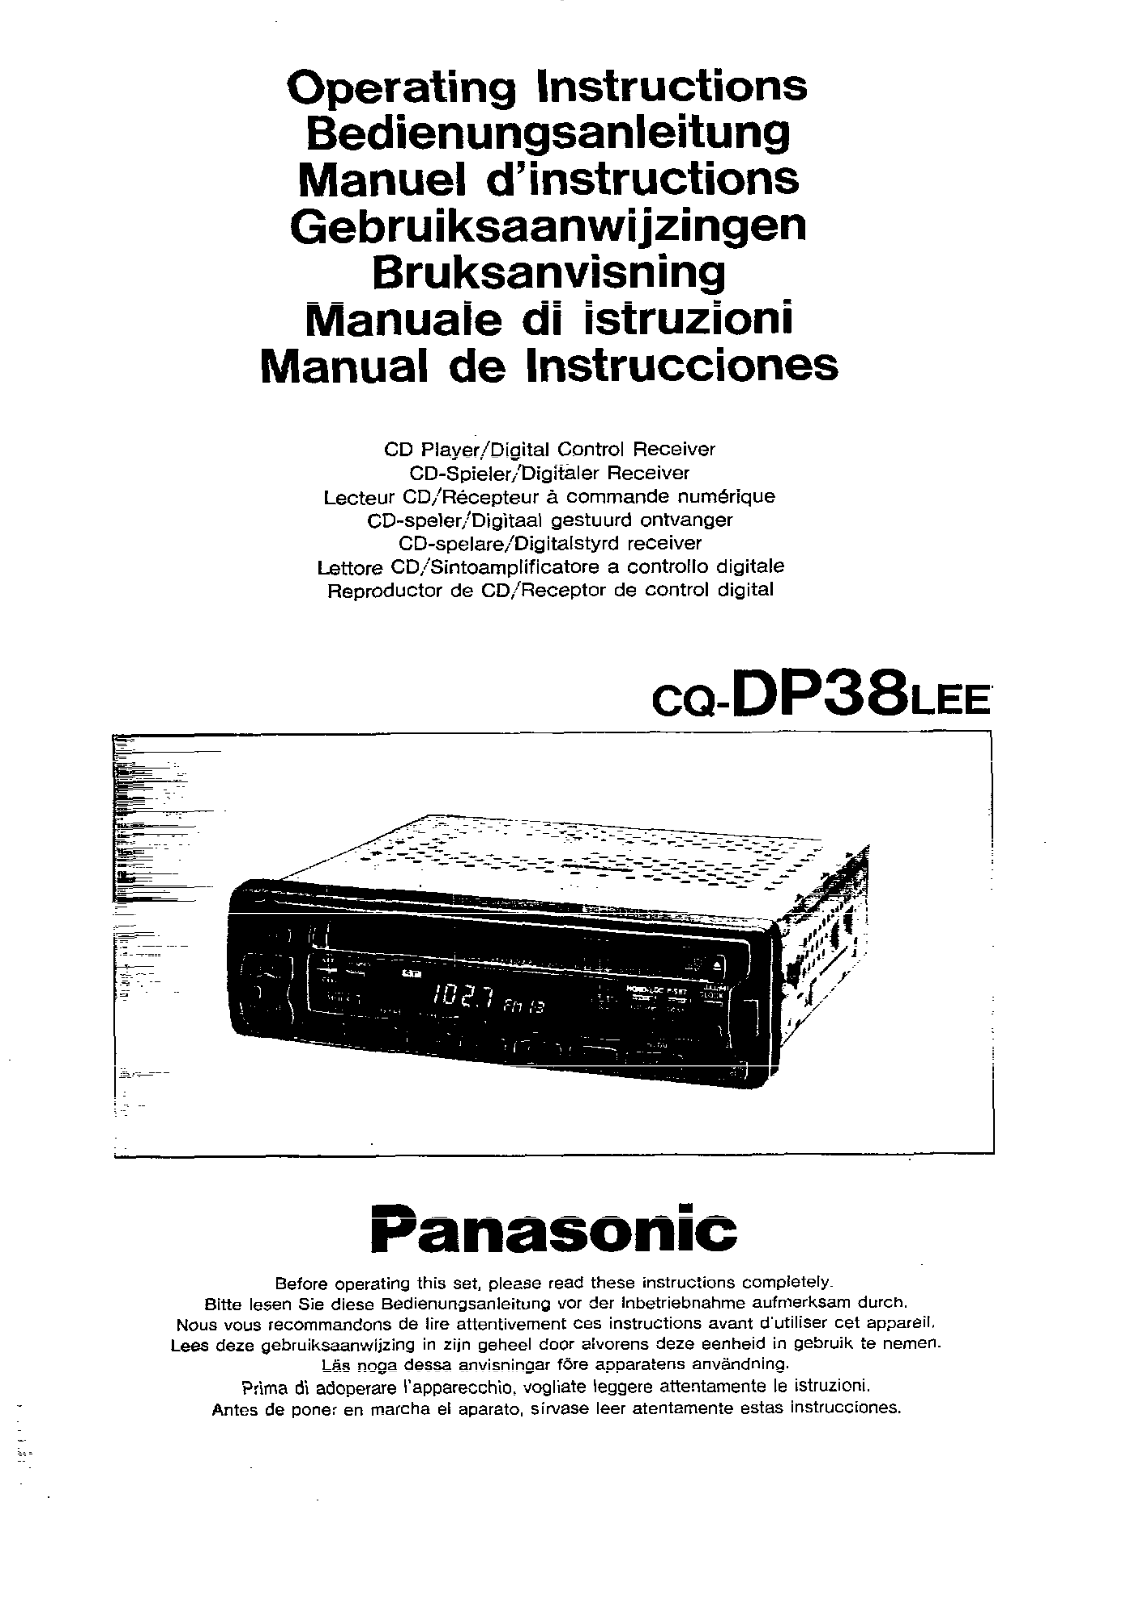 Panasonic CQ-DP38L User Manual